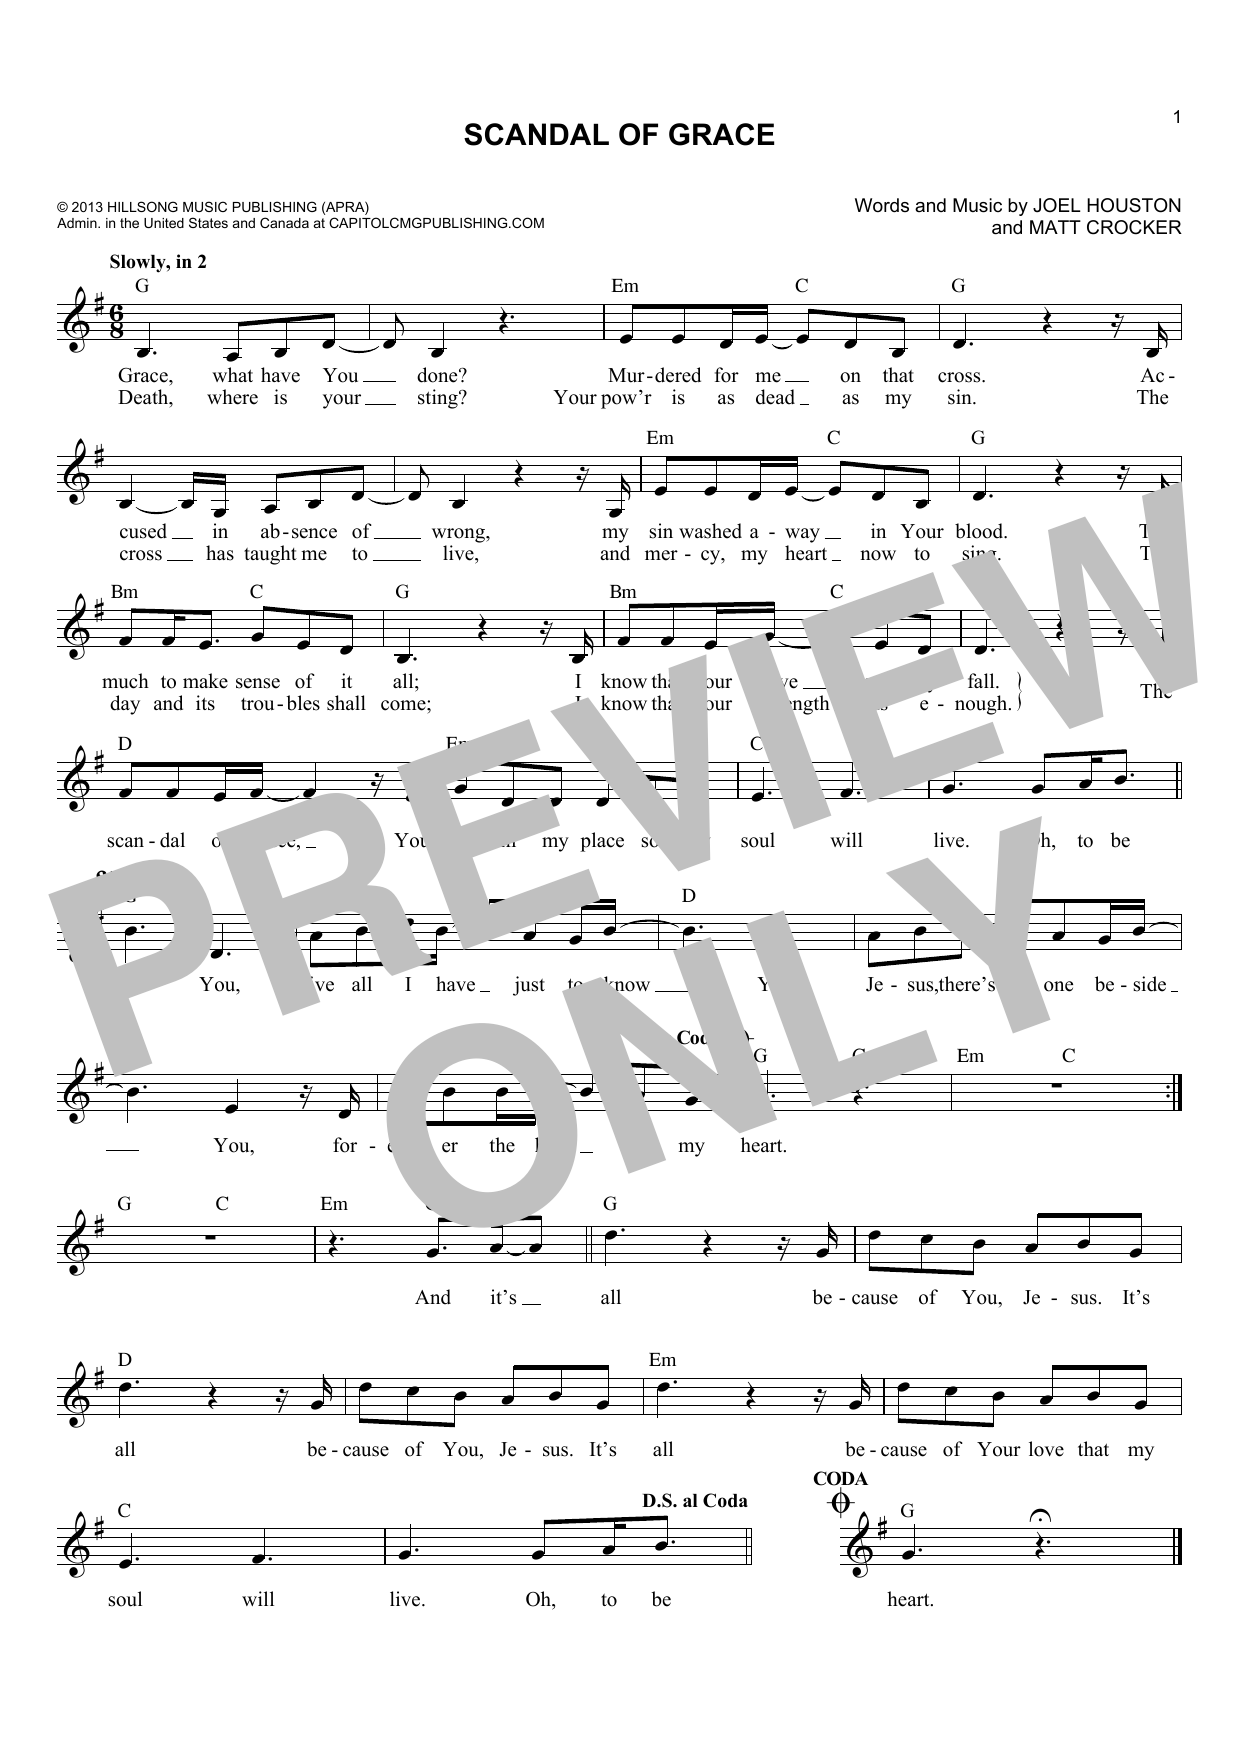 Matt Crocker Scandal Of Grace Sheet Music Notes & Chords for Melody Line, Lyrics & Chords - Download or Print PDF